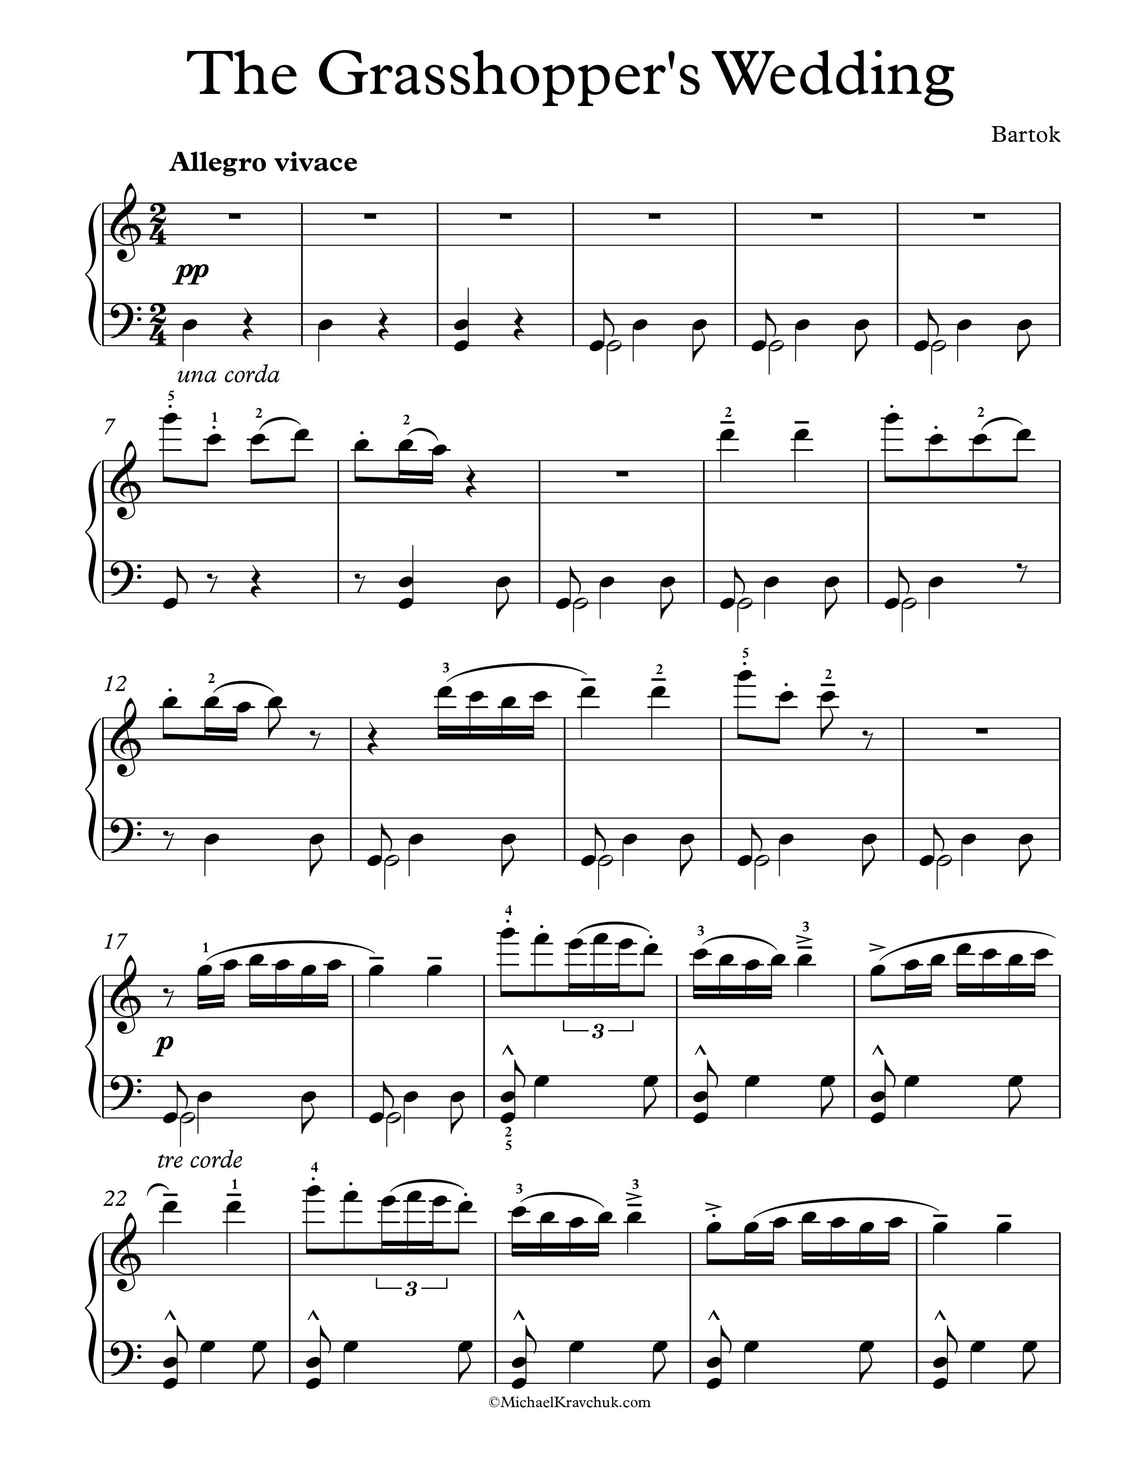 Free Piano Sheet Music - The Grasshopper's Wedding - Bartok